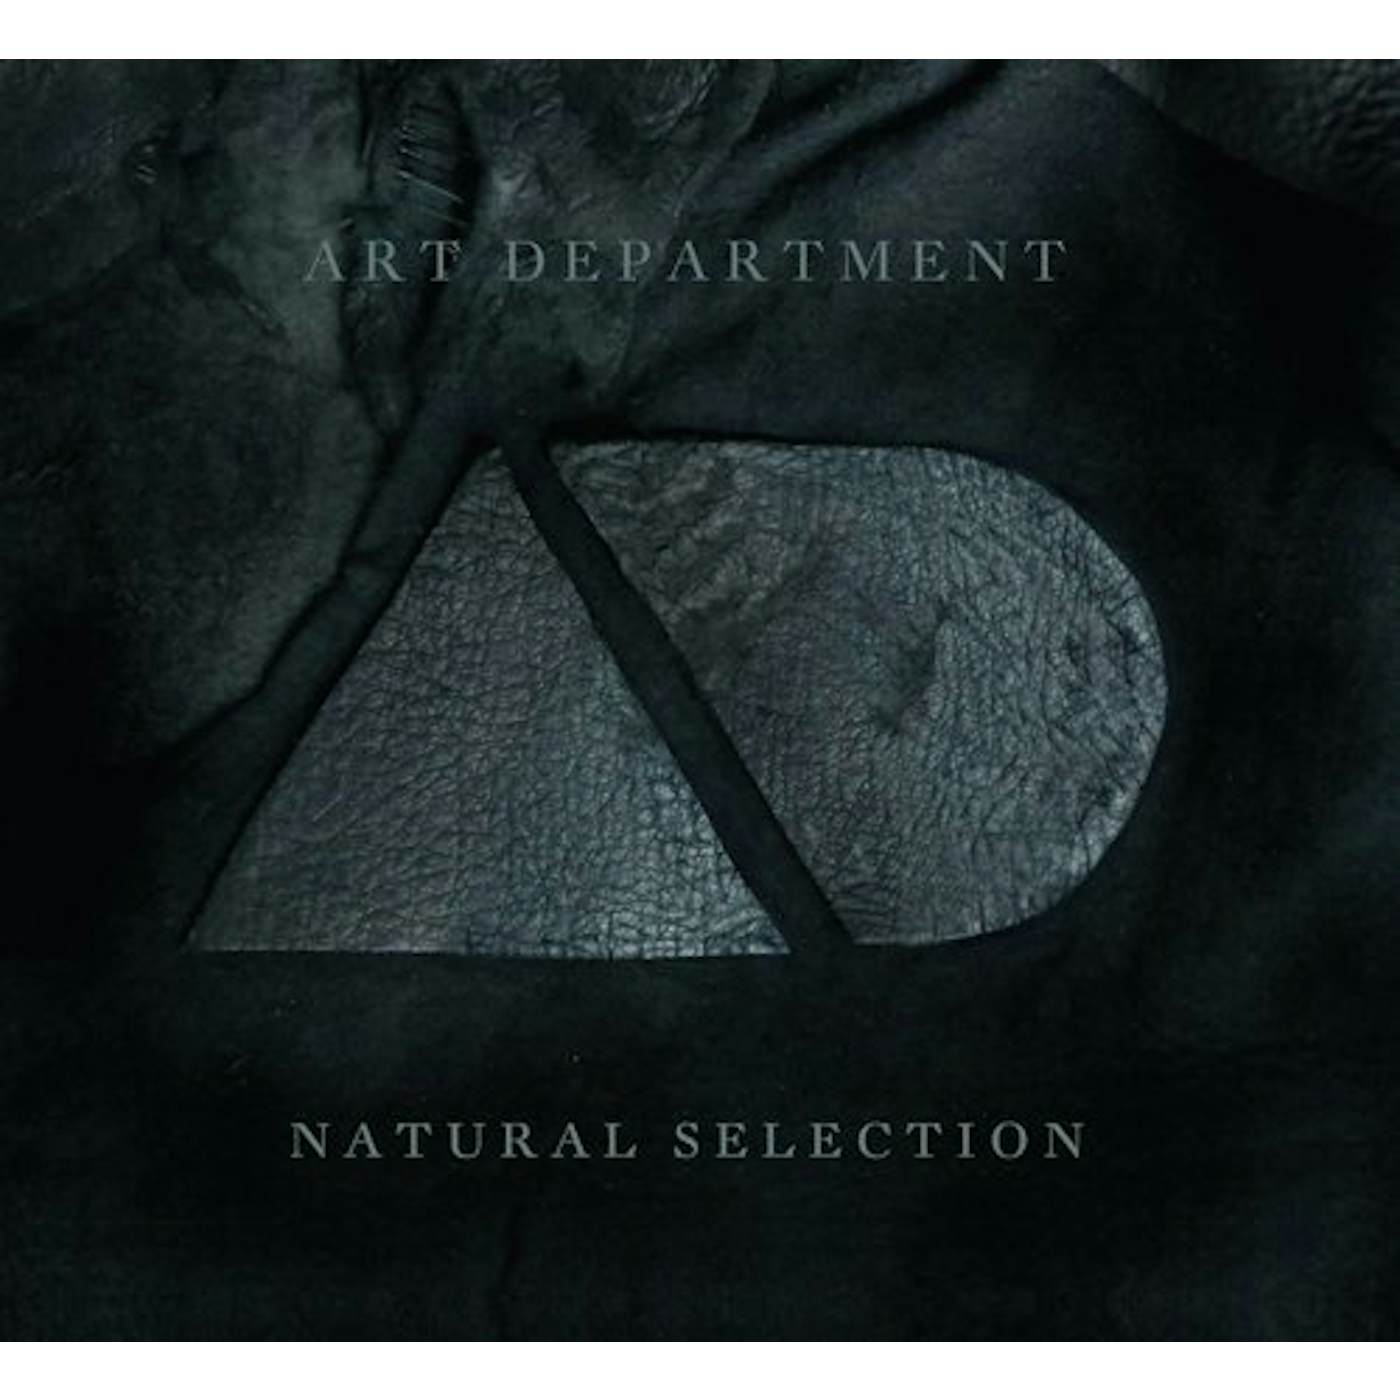 Art Department NATURAL SELECTION CD